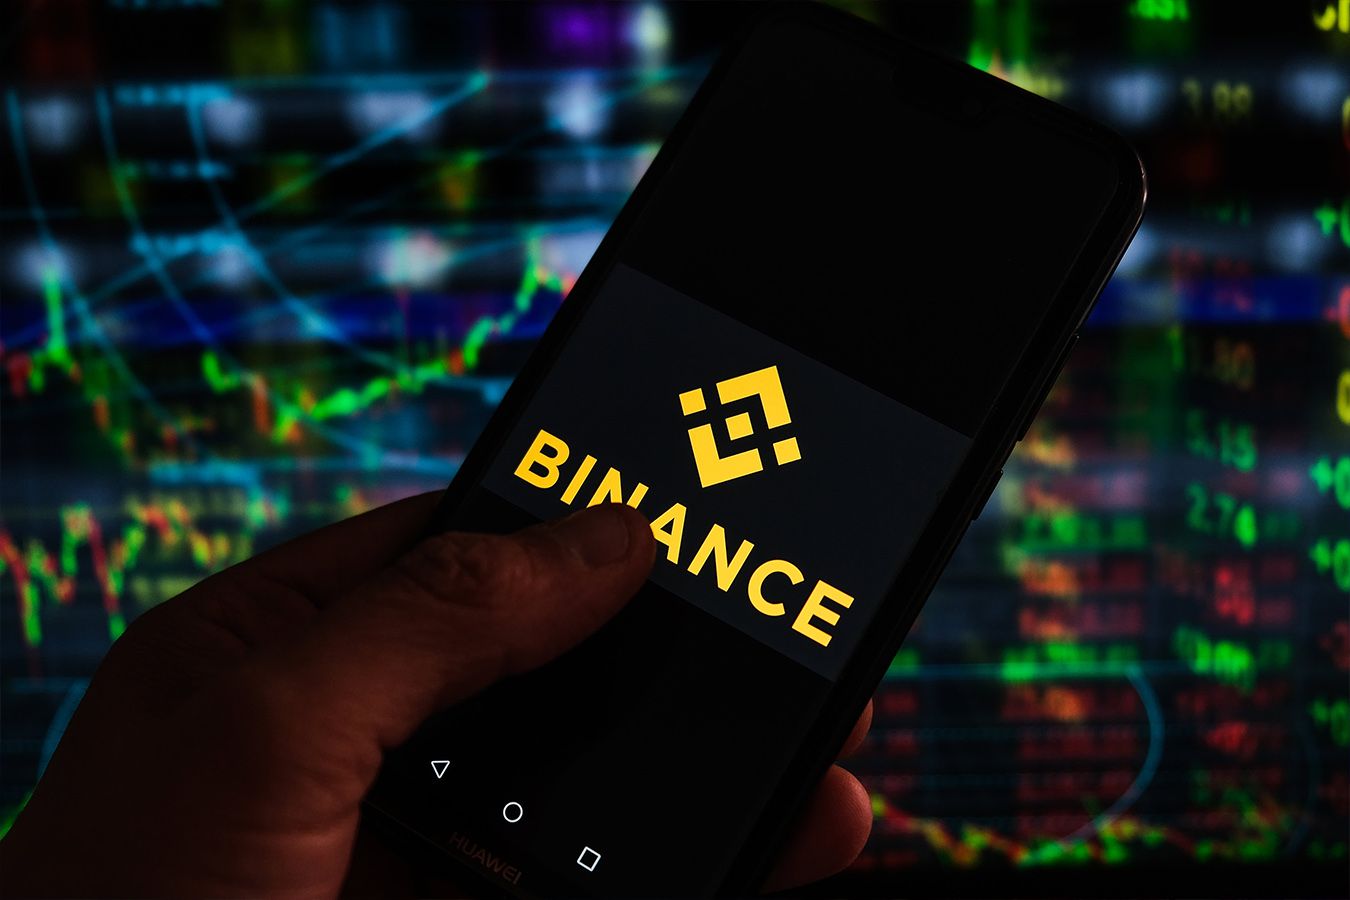 ‎Binance: Buy Bitcoin & Crypto on the App Store